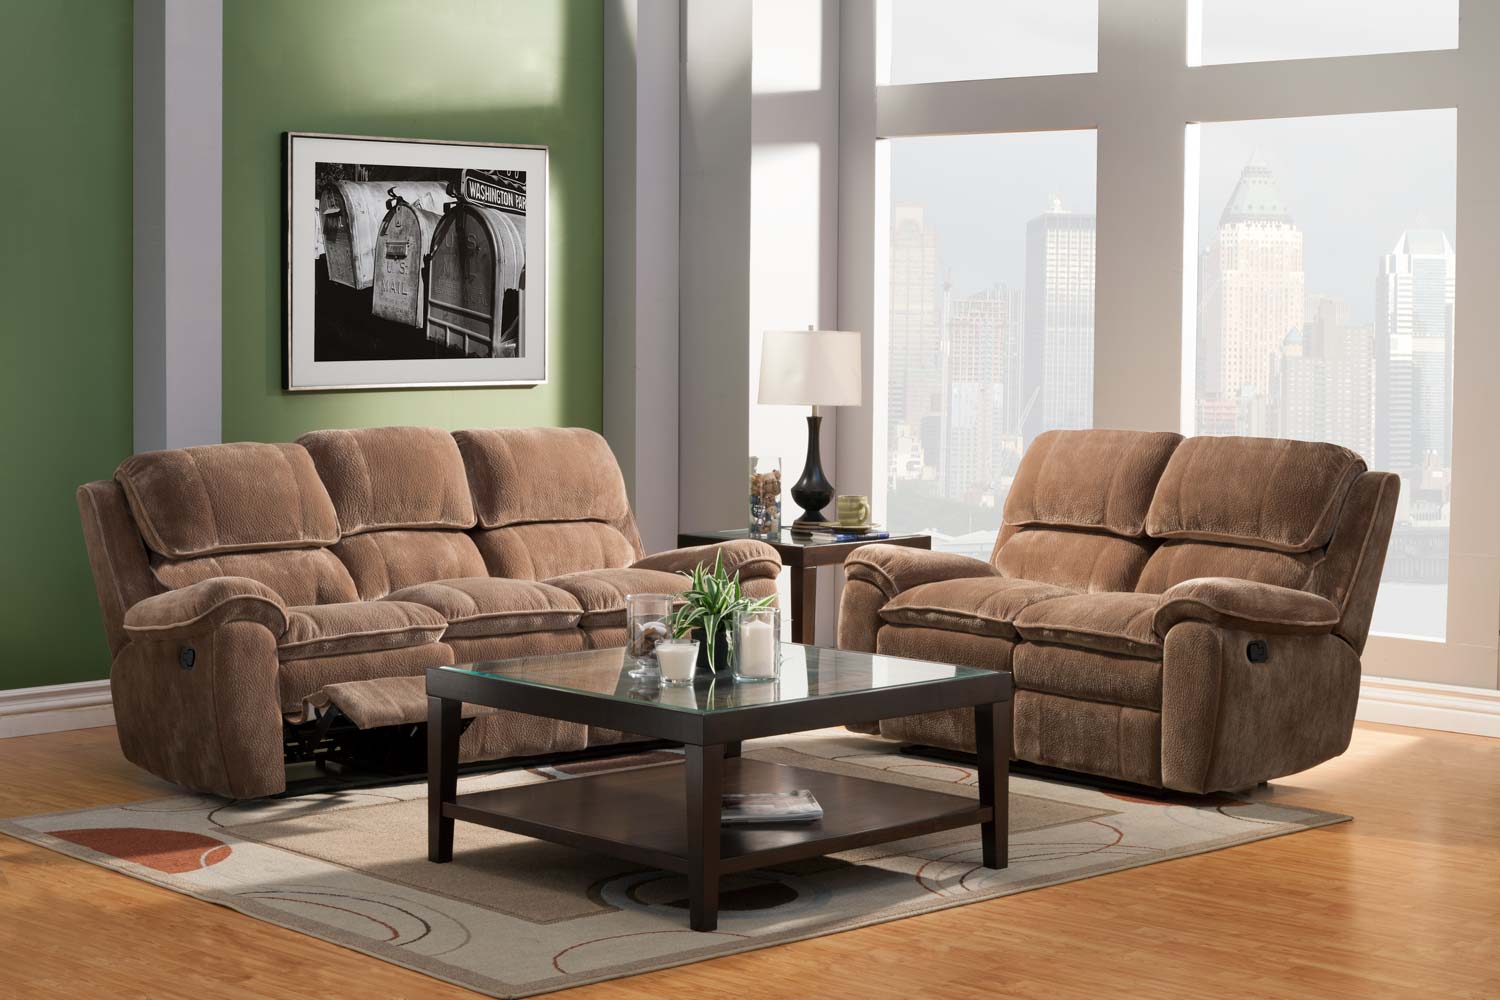 Homelegance Reilly Reclining Sofa Set - Brown - Textured Plush Microfiber